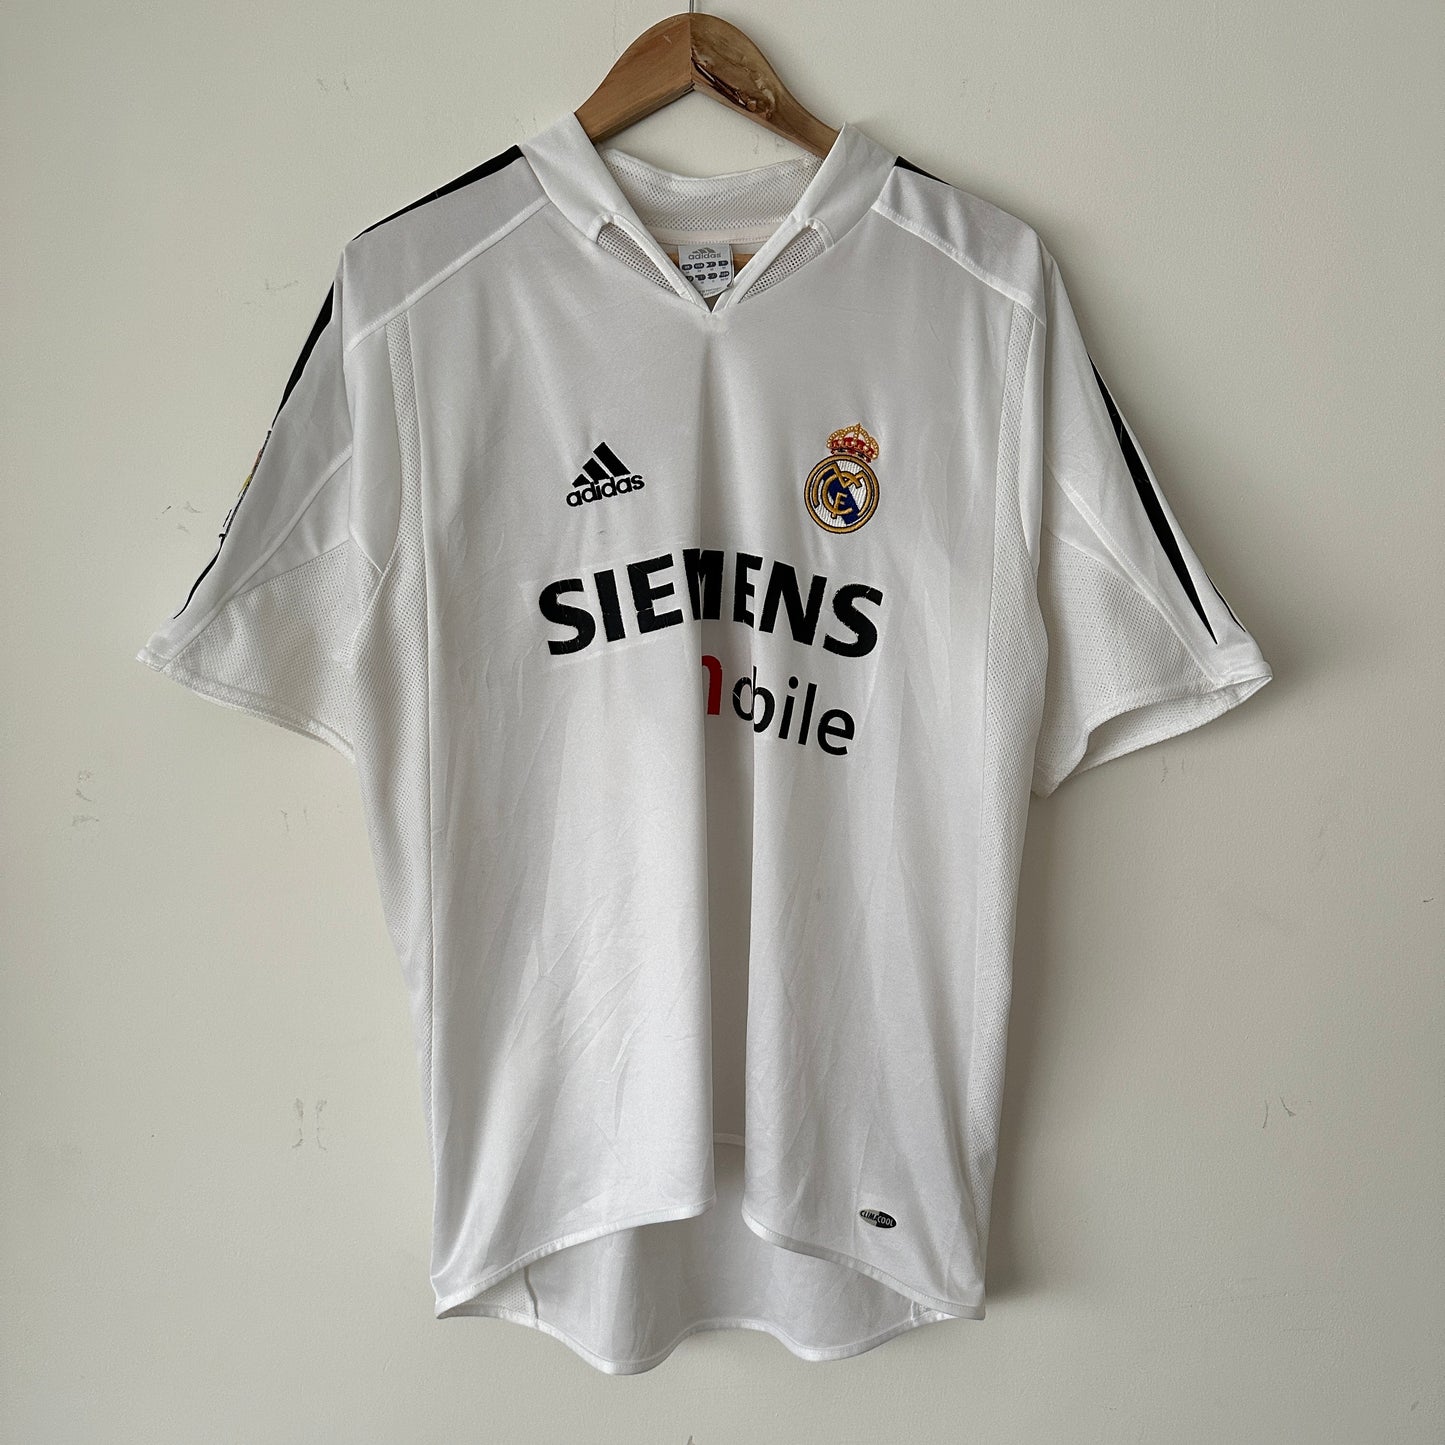 Real Madrid x Adidas 2004-05 "Beckham No.23" Home Jersey